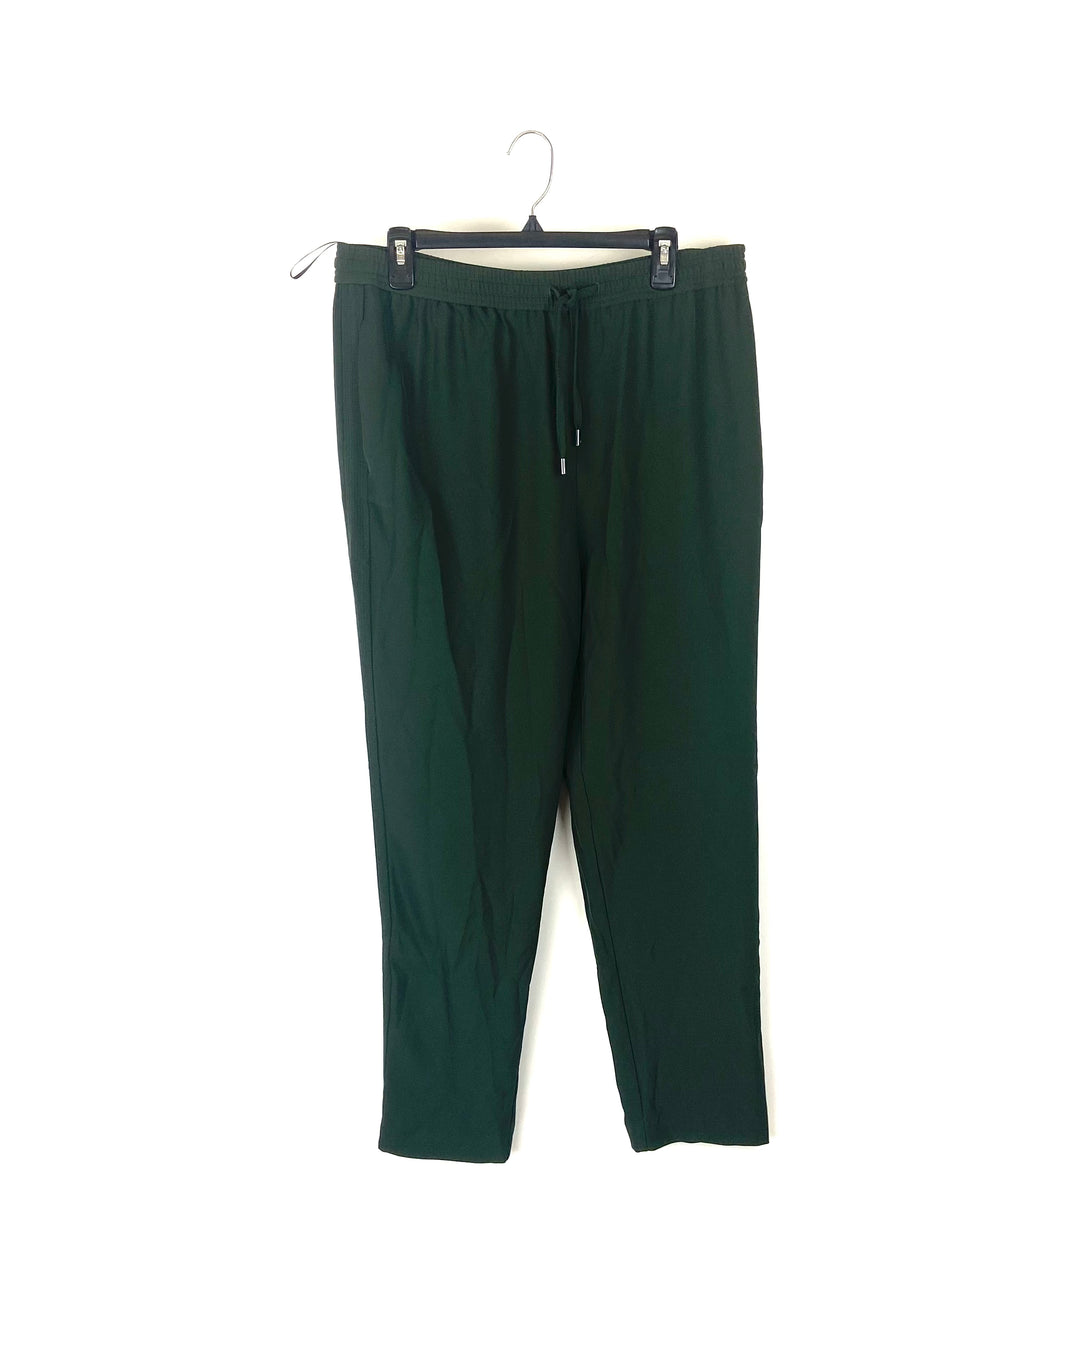 Green Pant- Size 12